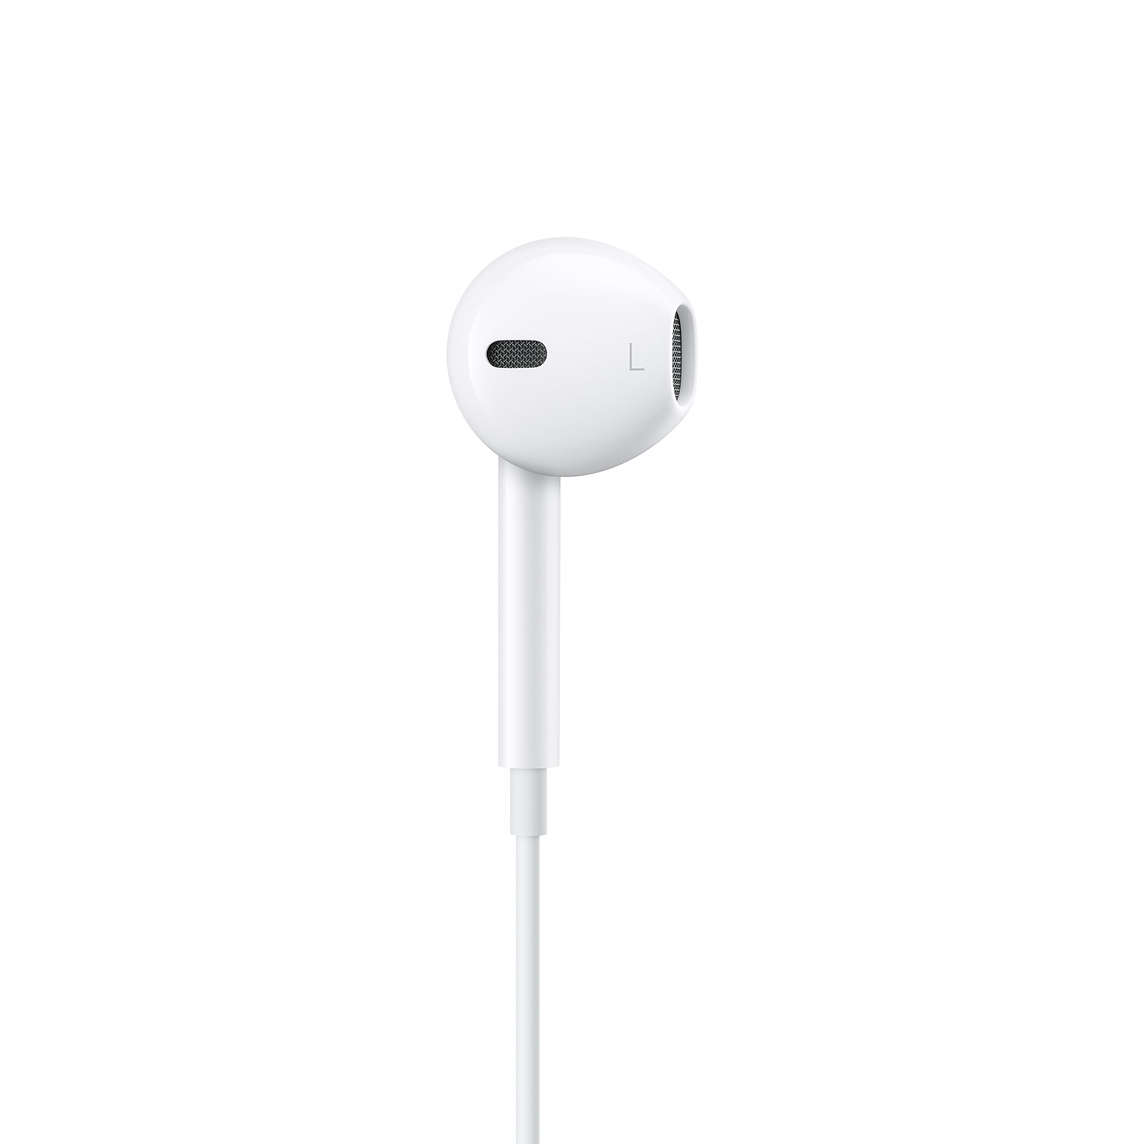  - Audífonos Apple Earpods con conector Lightning 3